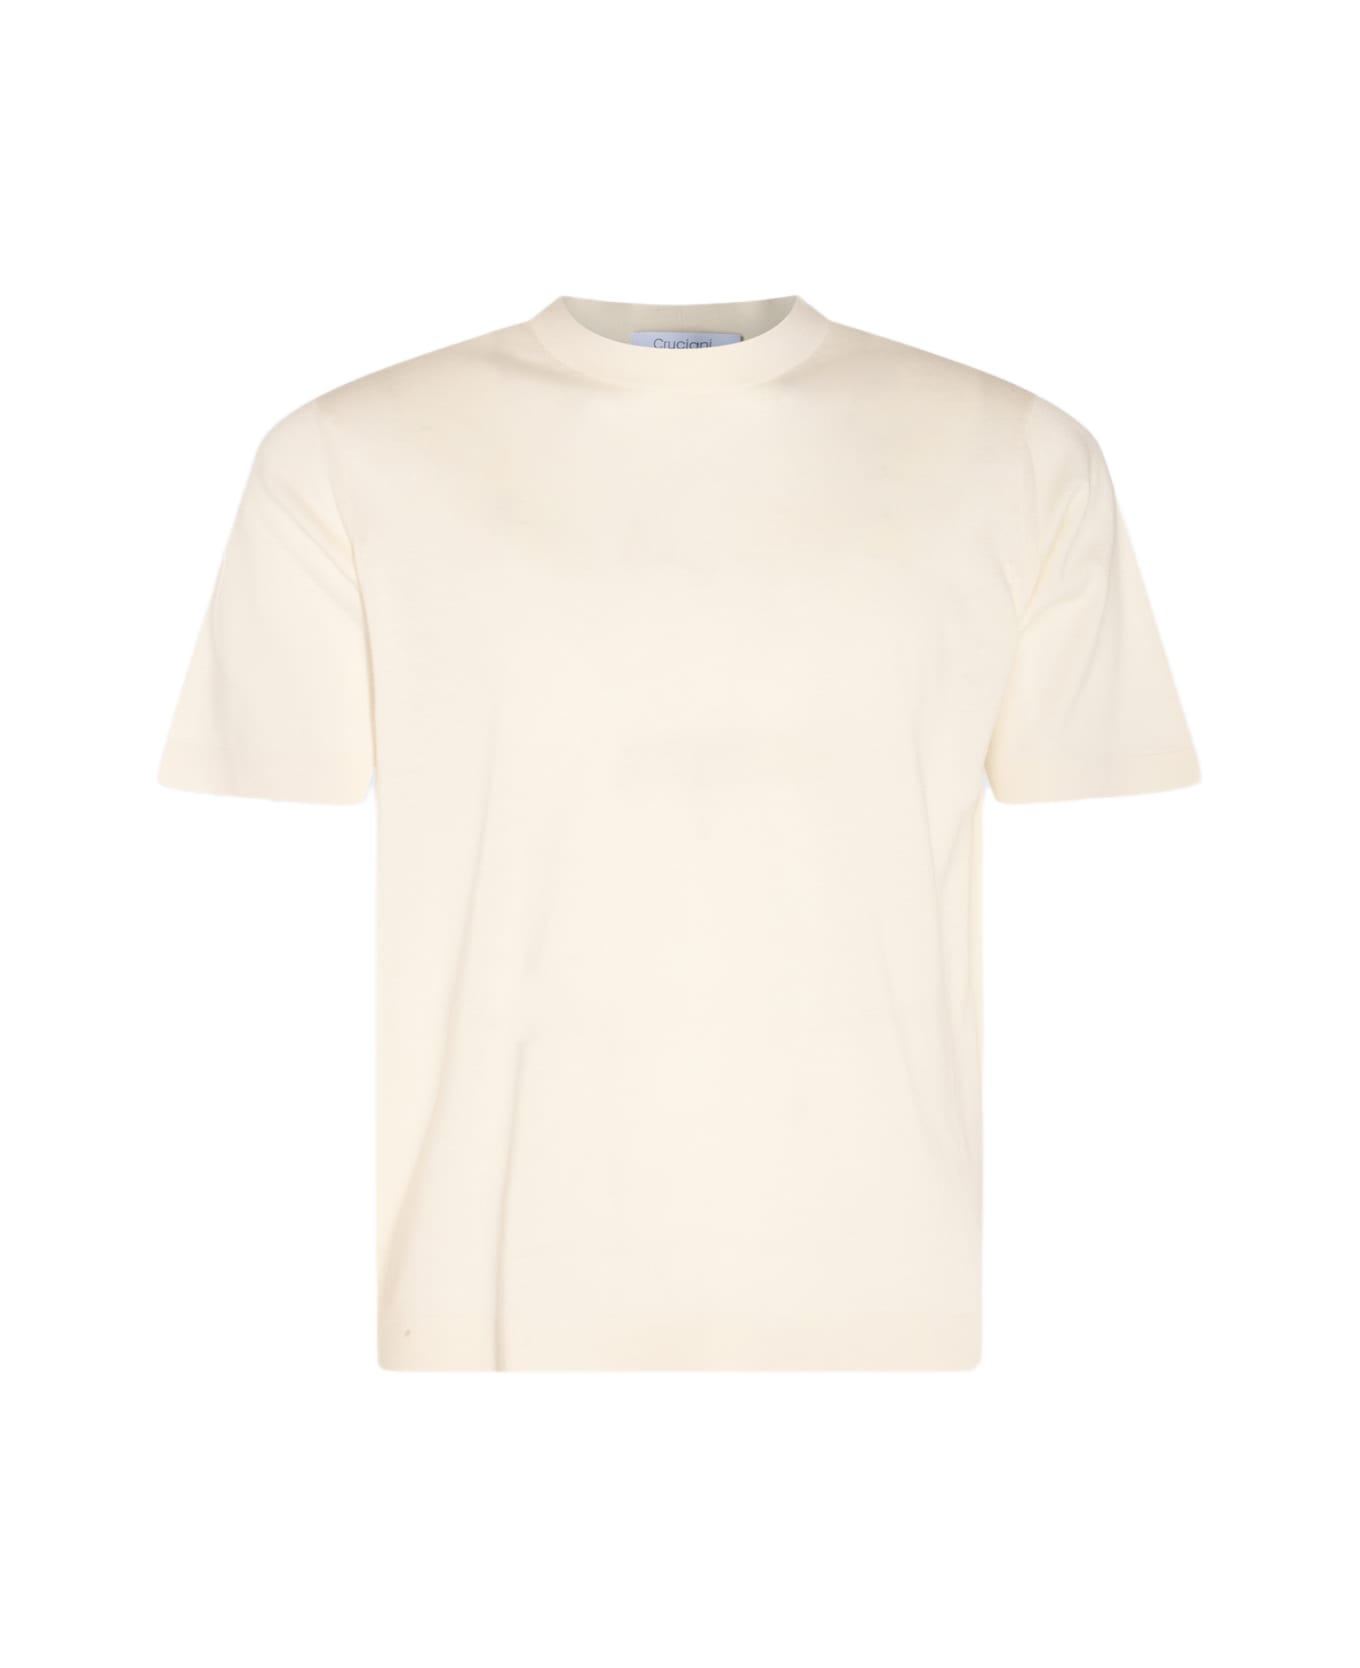 Cruciani White Cotton T-shirt - White